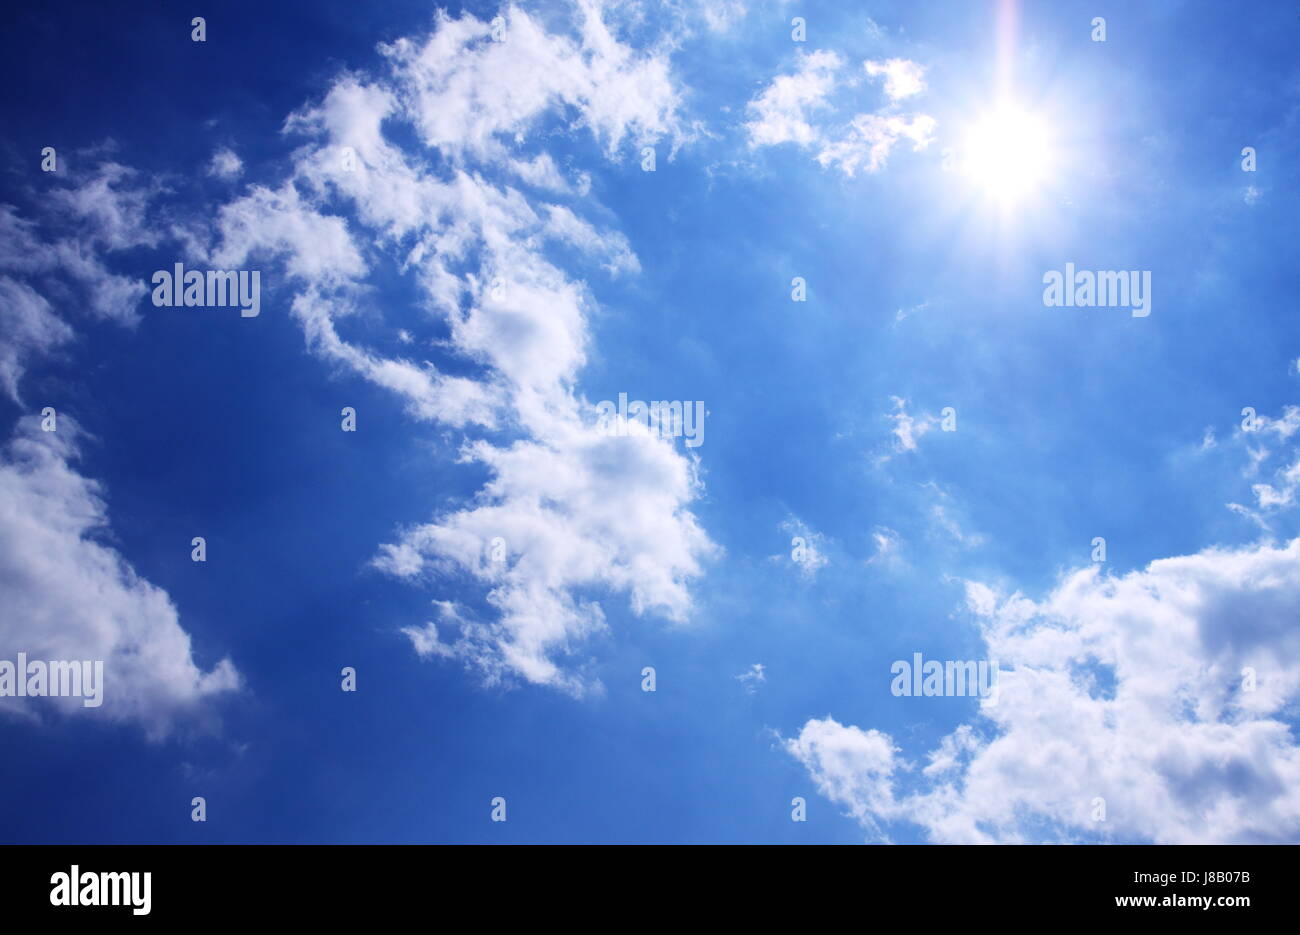 blue, cloud, clouded sky, bluer, firmament, sky, clouds, weather, blue, shine, Stock Photo